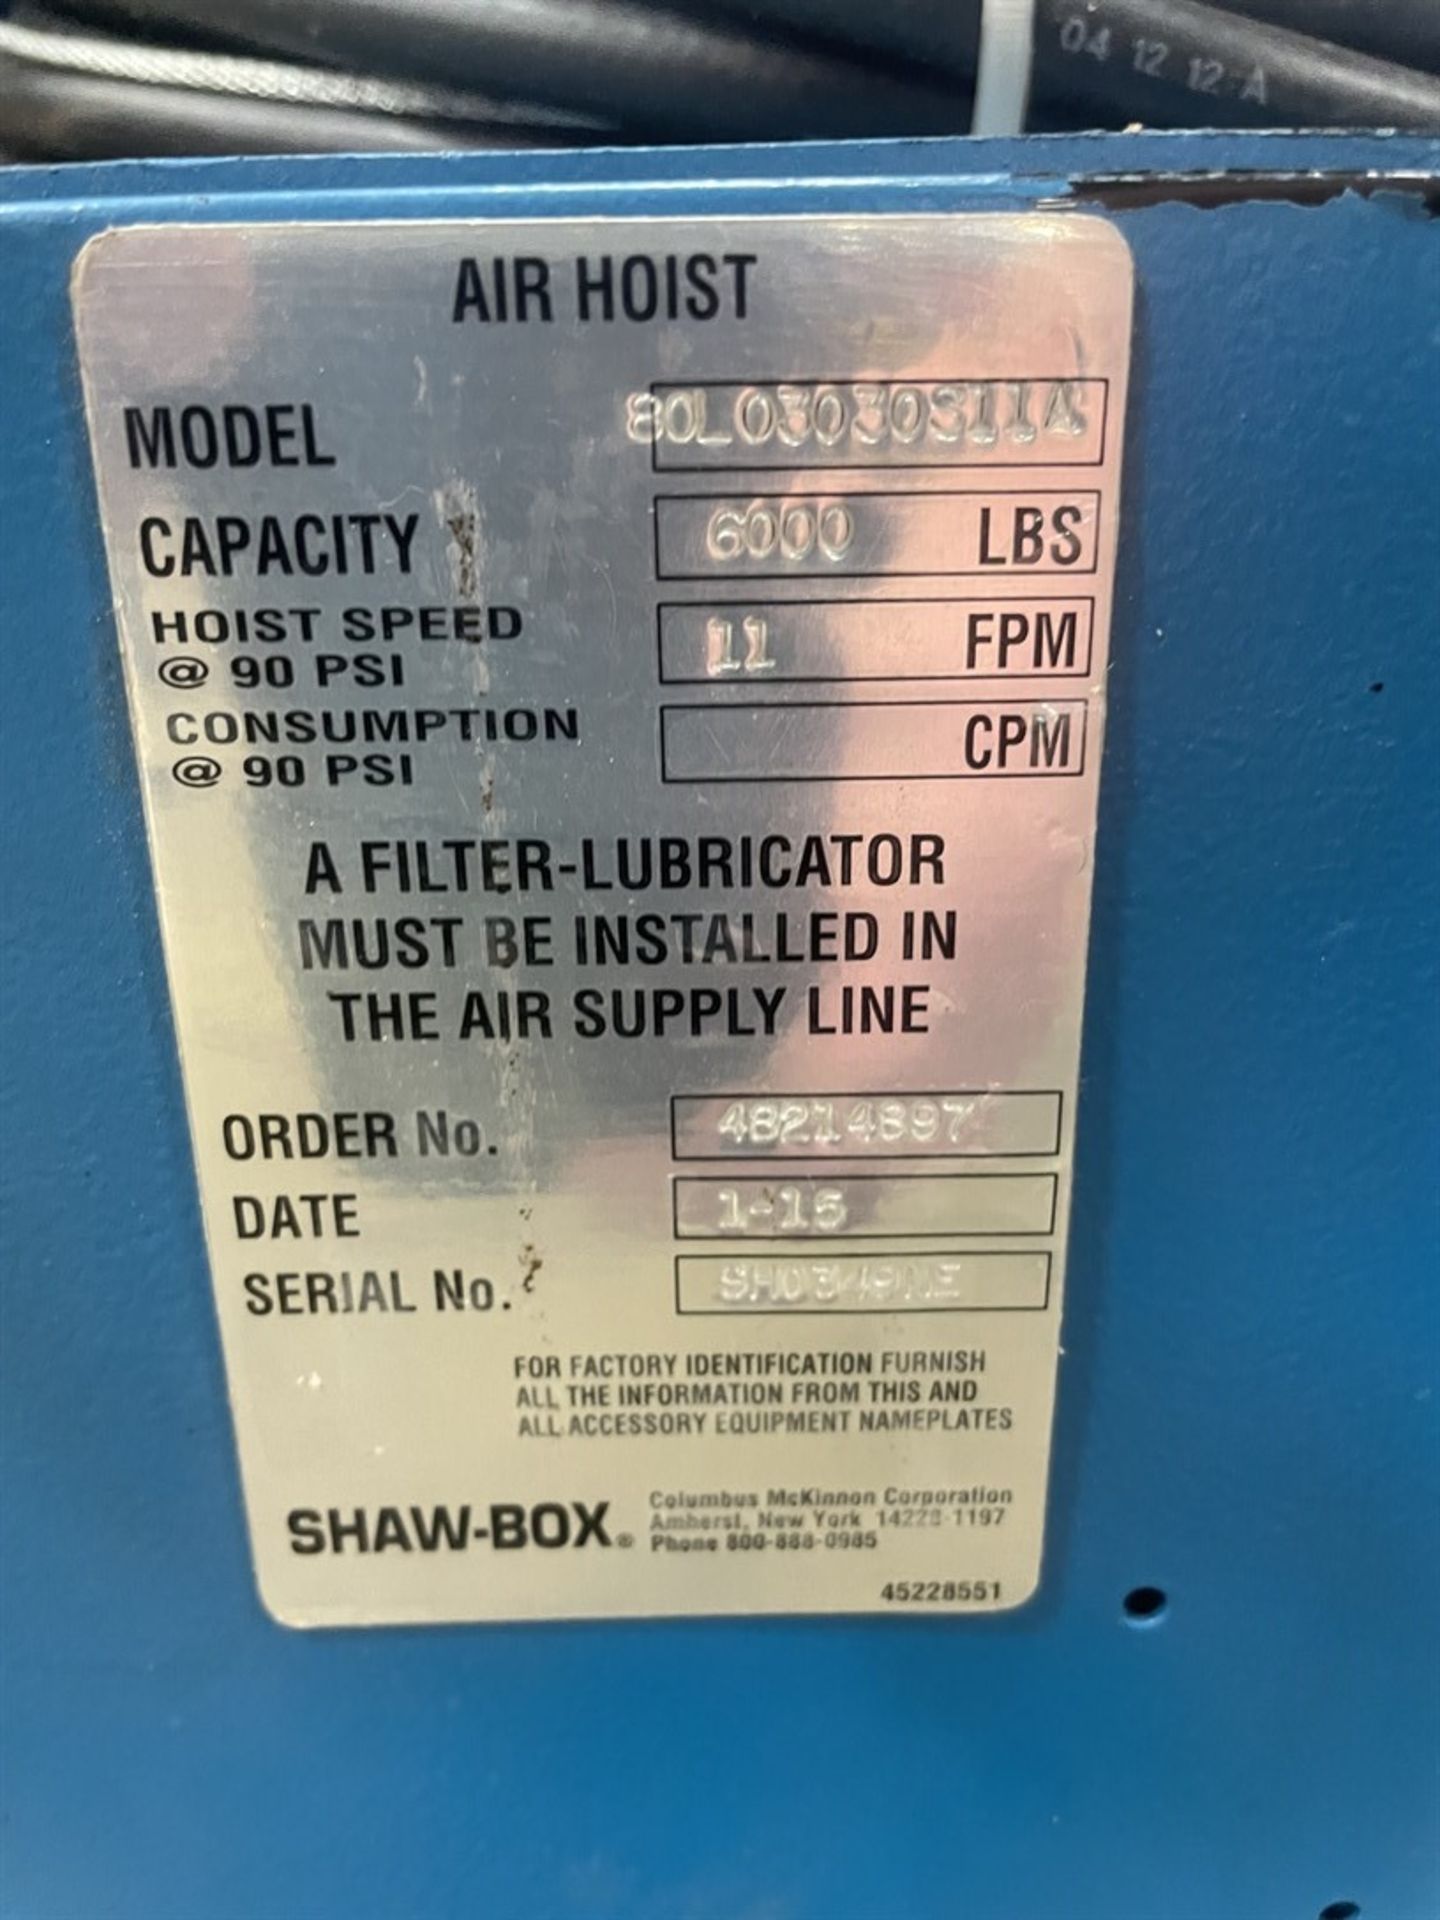 SHAW-BOX 80L03030S11A 3 Ton Air Hoist w/ SHAW-BOX RADT06 Air Motor Trolley - Image 5 of 5